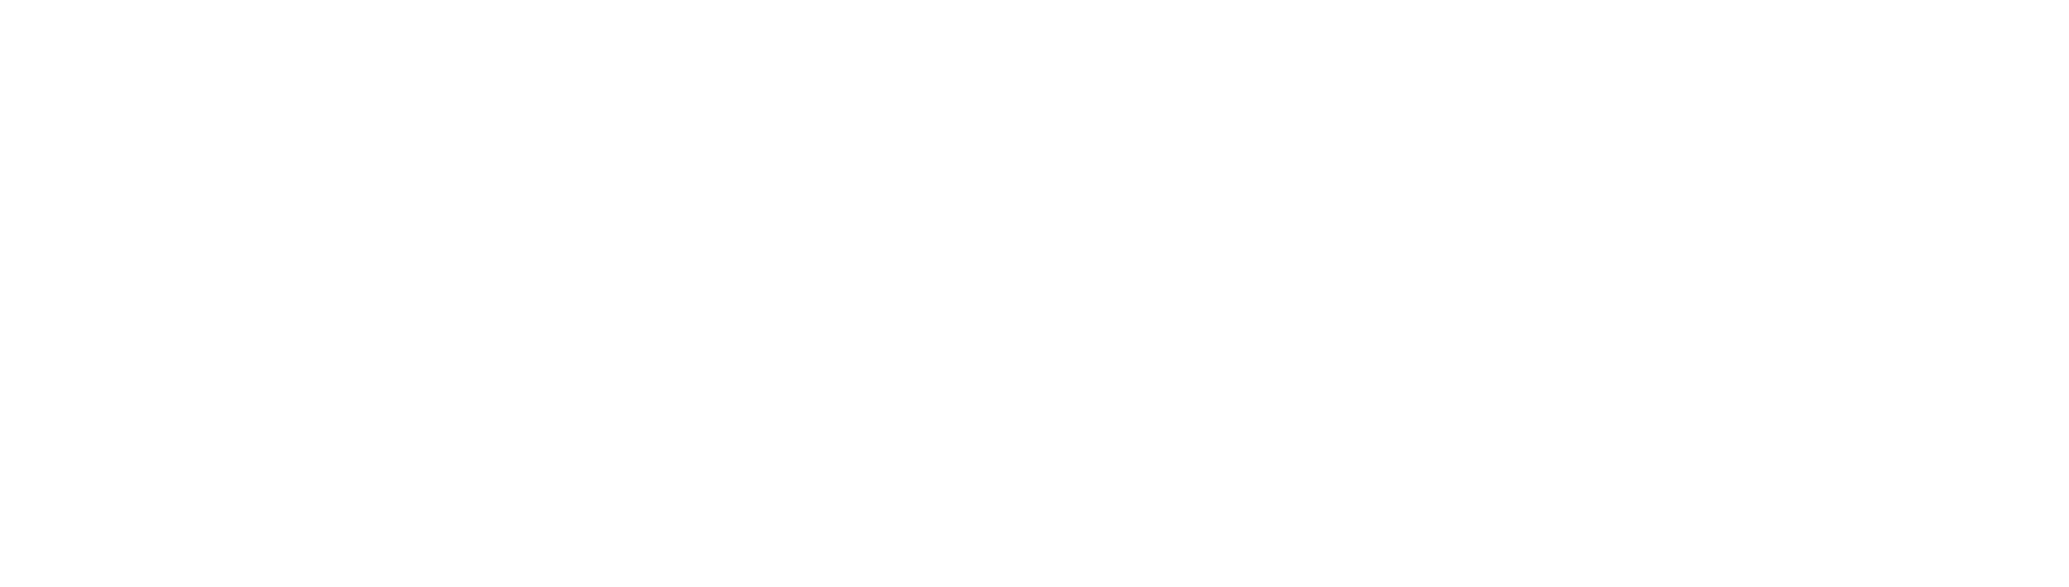 Radisys Logo - Radisys | Enabling Open Telecom